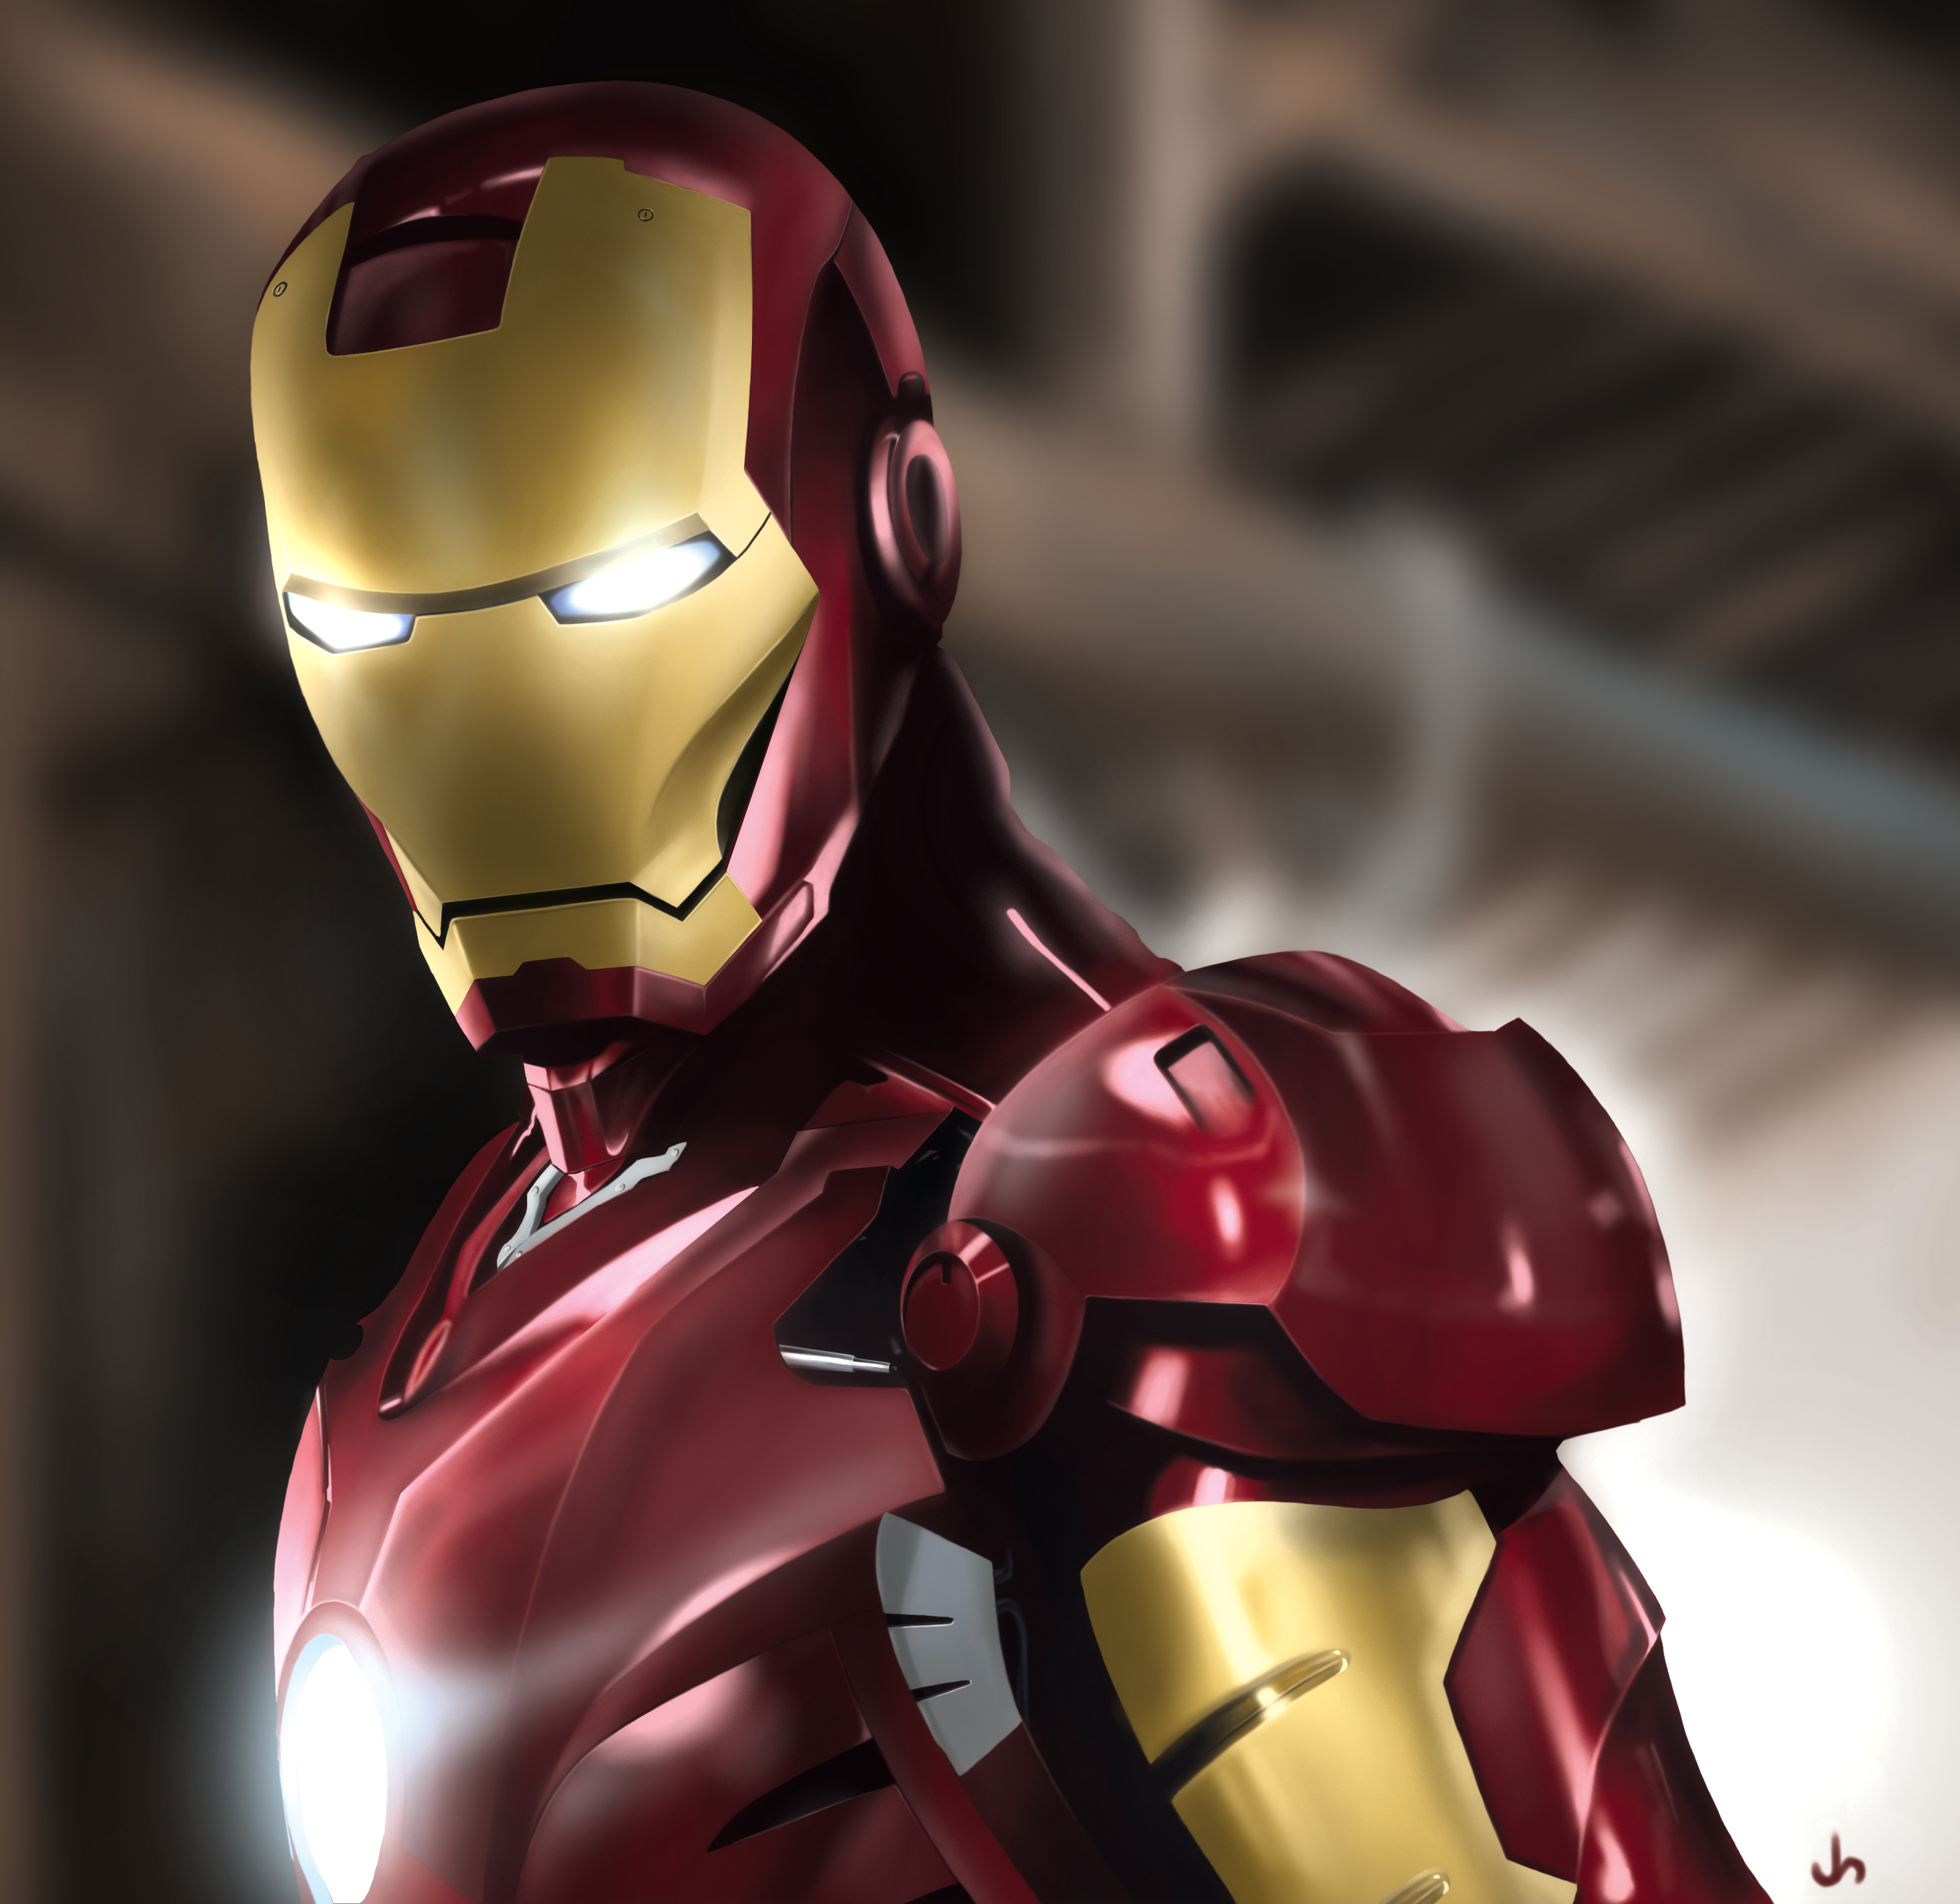 Wallpapers rendering Iron Man deviant art on the desktop